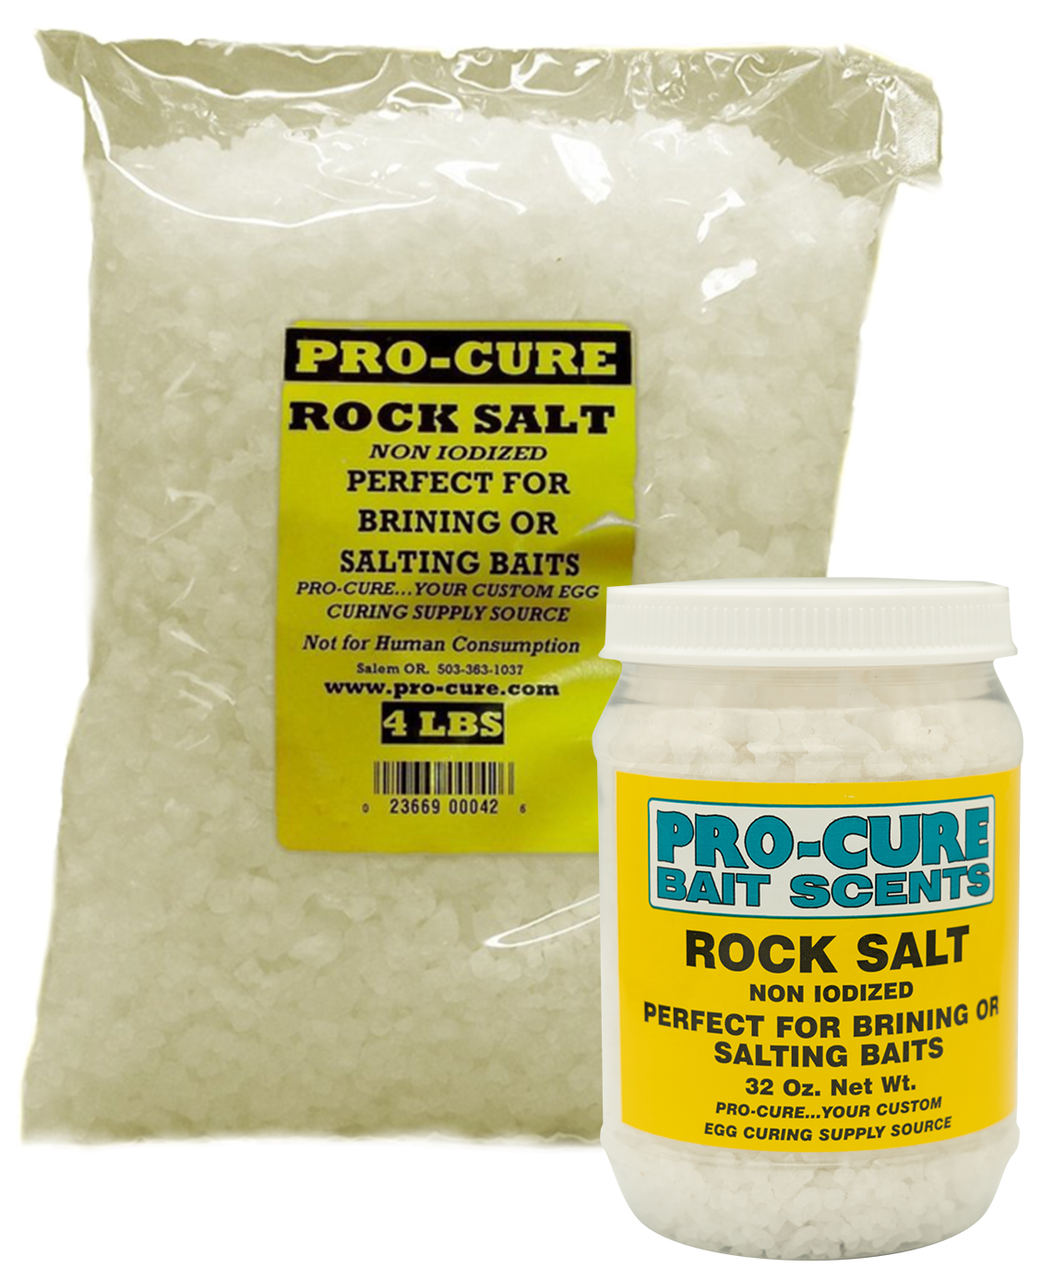 Pro-Cure Rock Salt